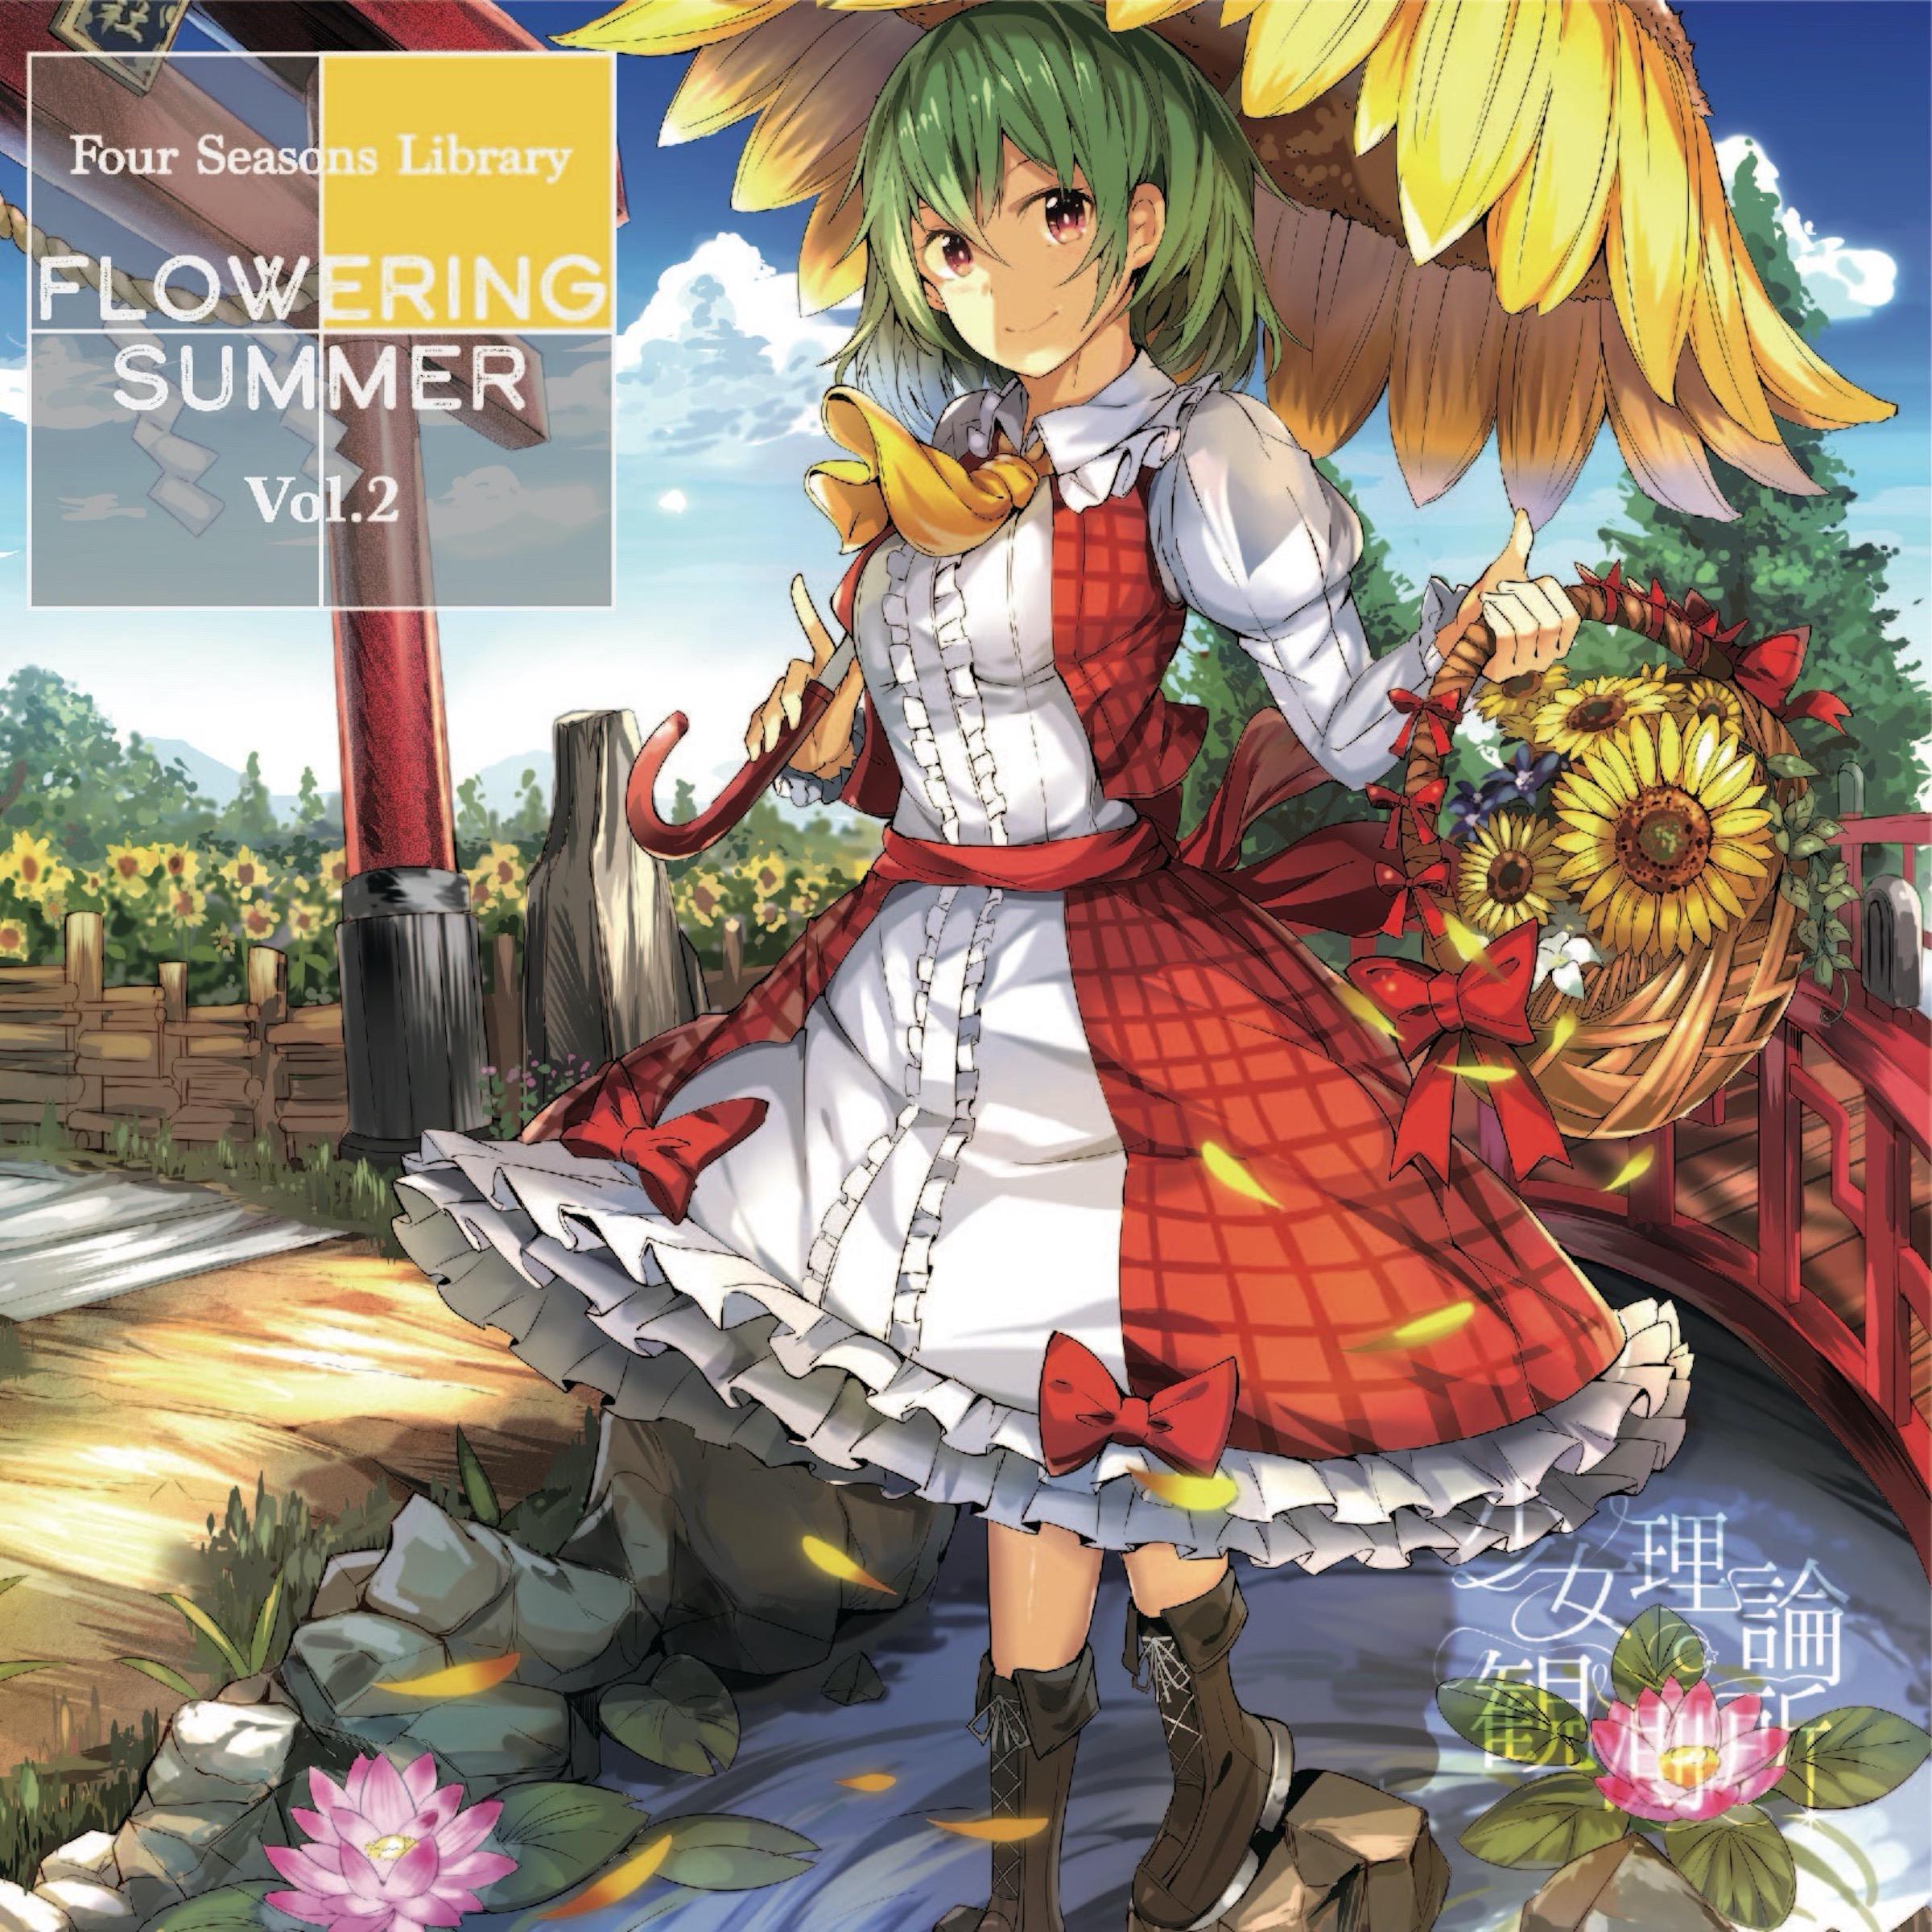 FLOWERING SUMMER -Four Seasons Library vol.2